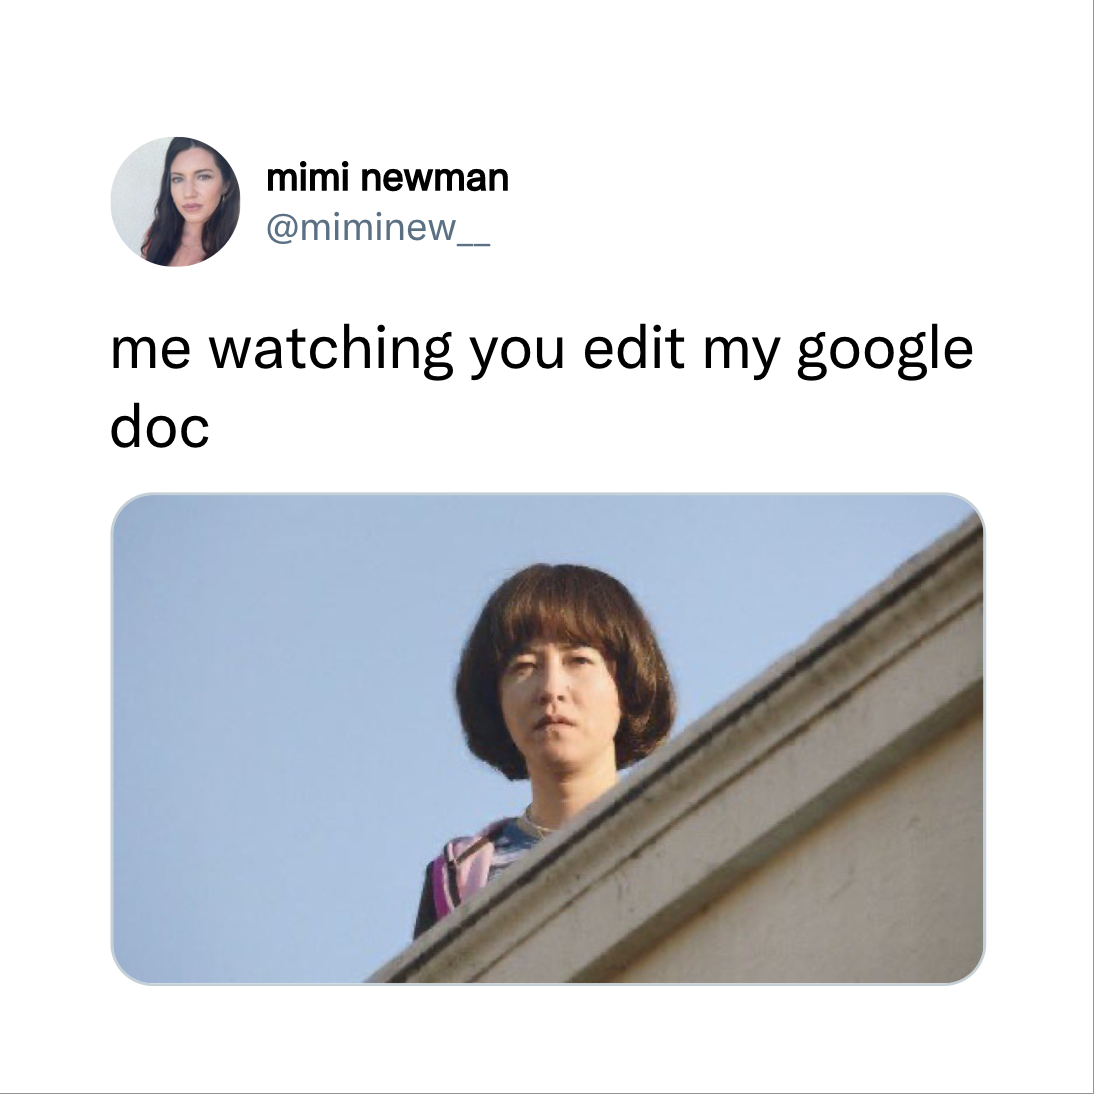 presentation - mimi newman me watching you edit my google doc